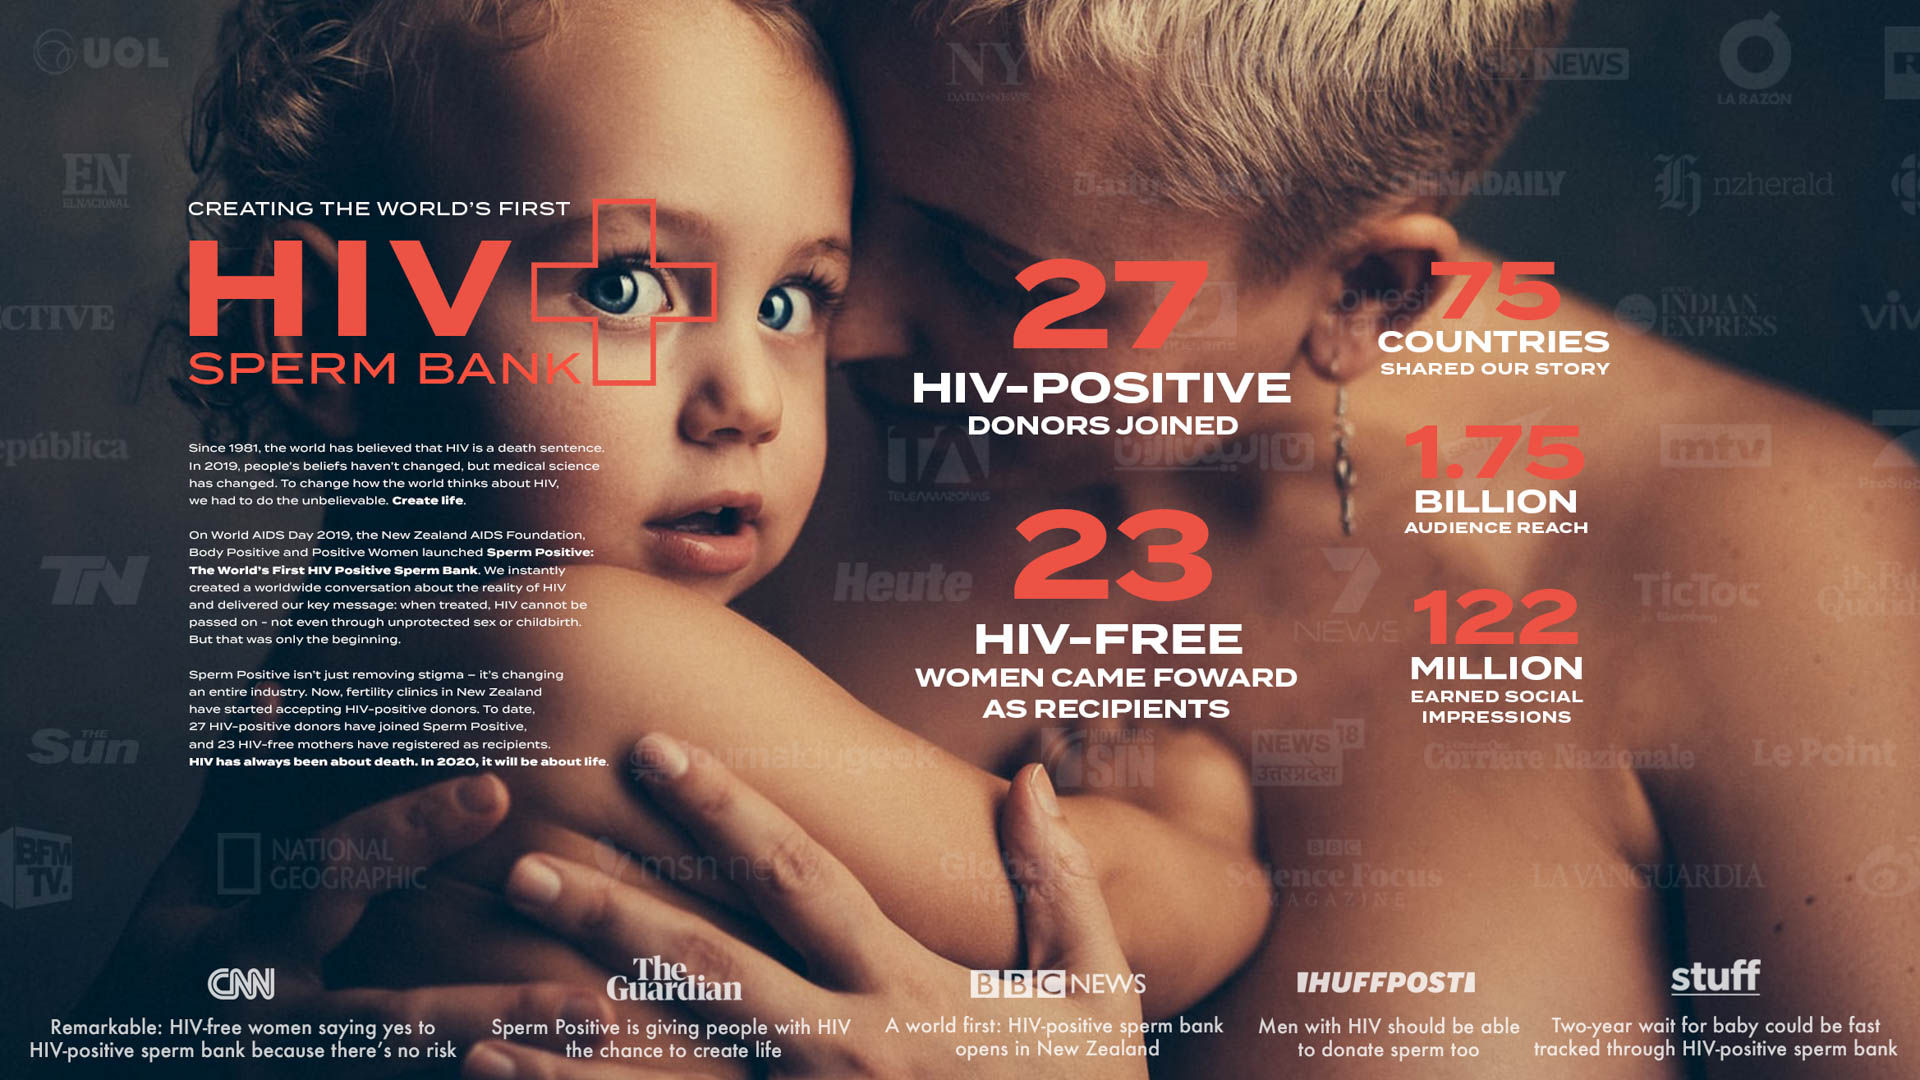 The HIV Positive Sperm Bank